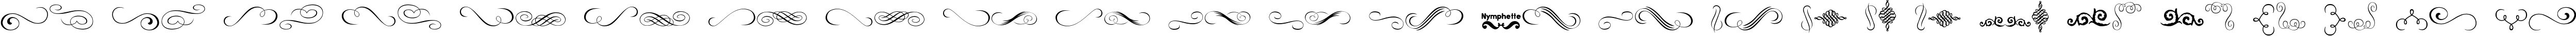 Пример написания английского алфавита шрифтом Nymphette